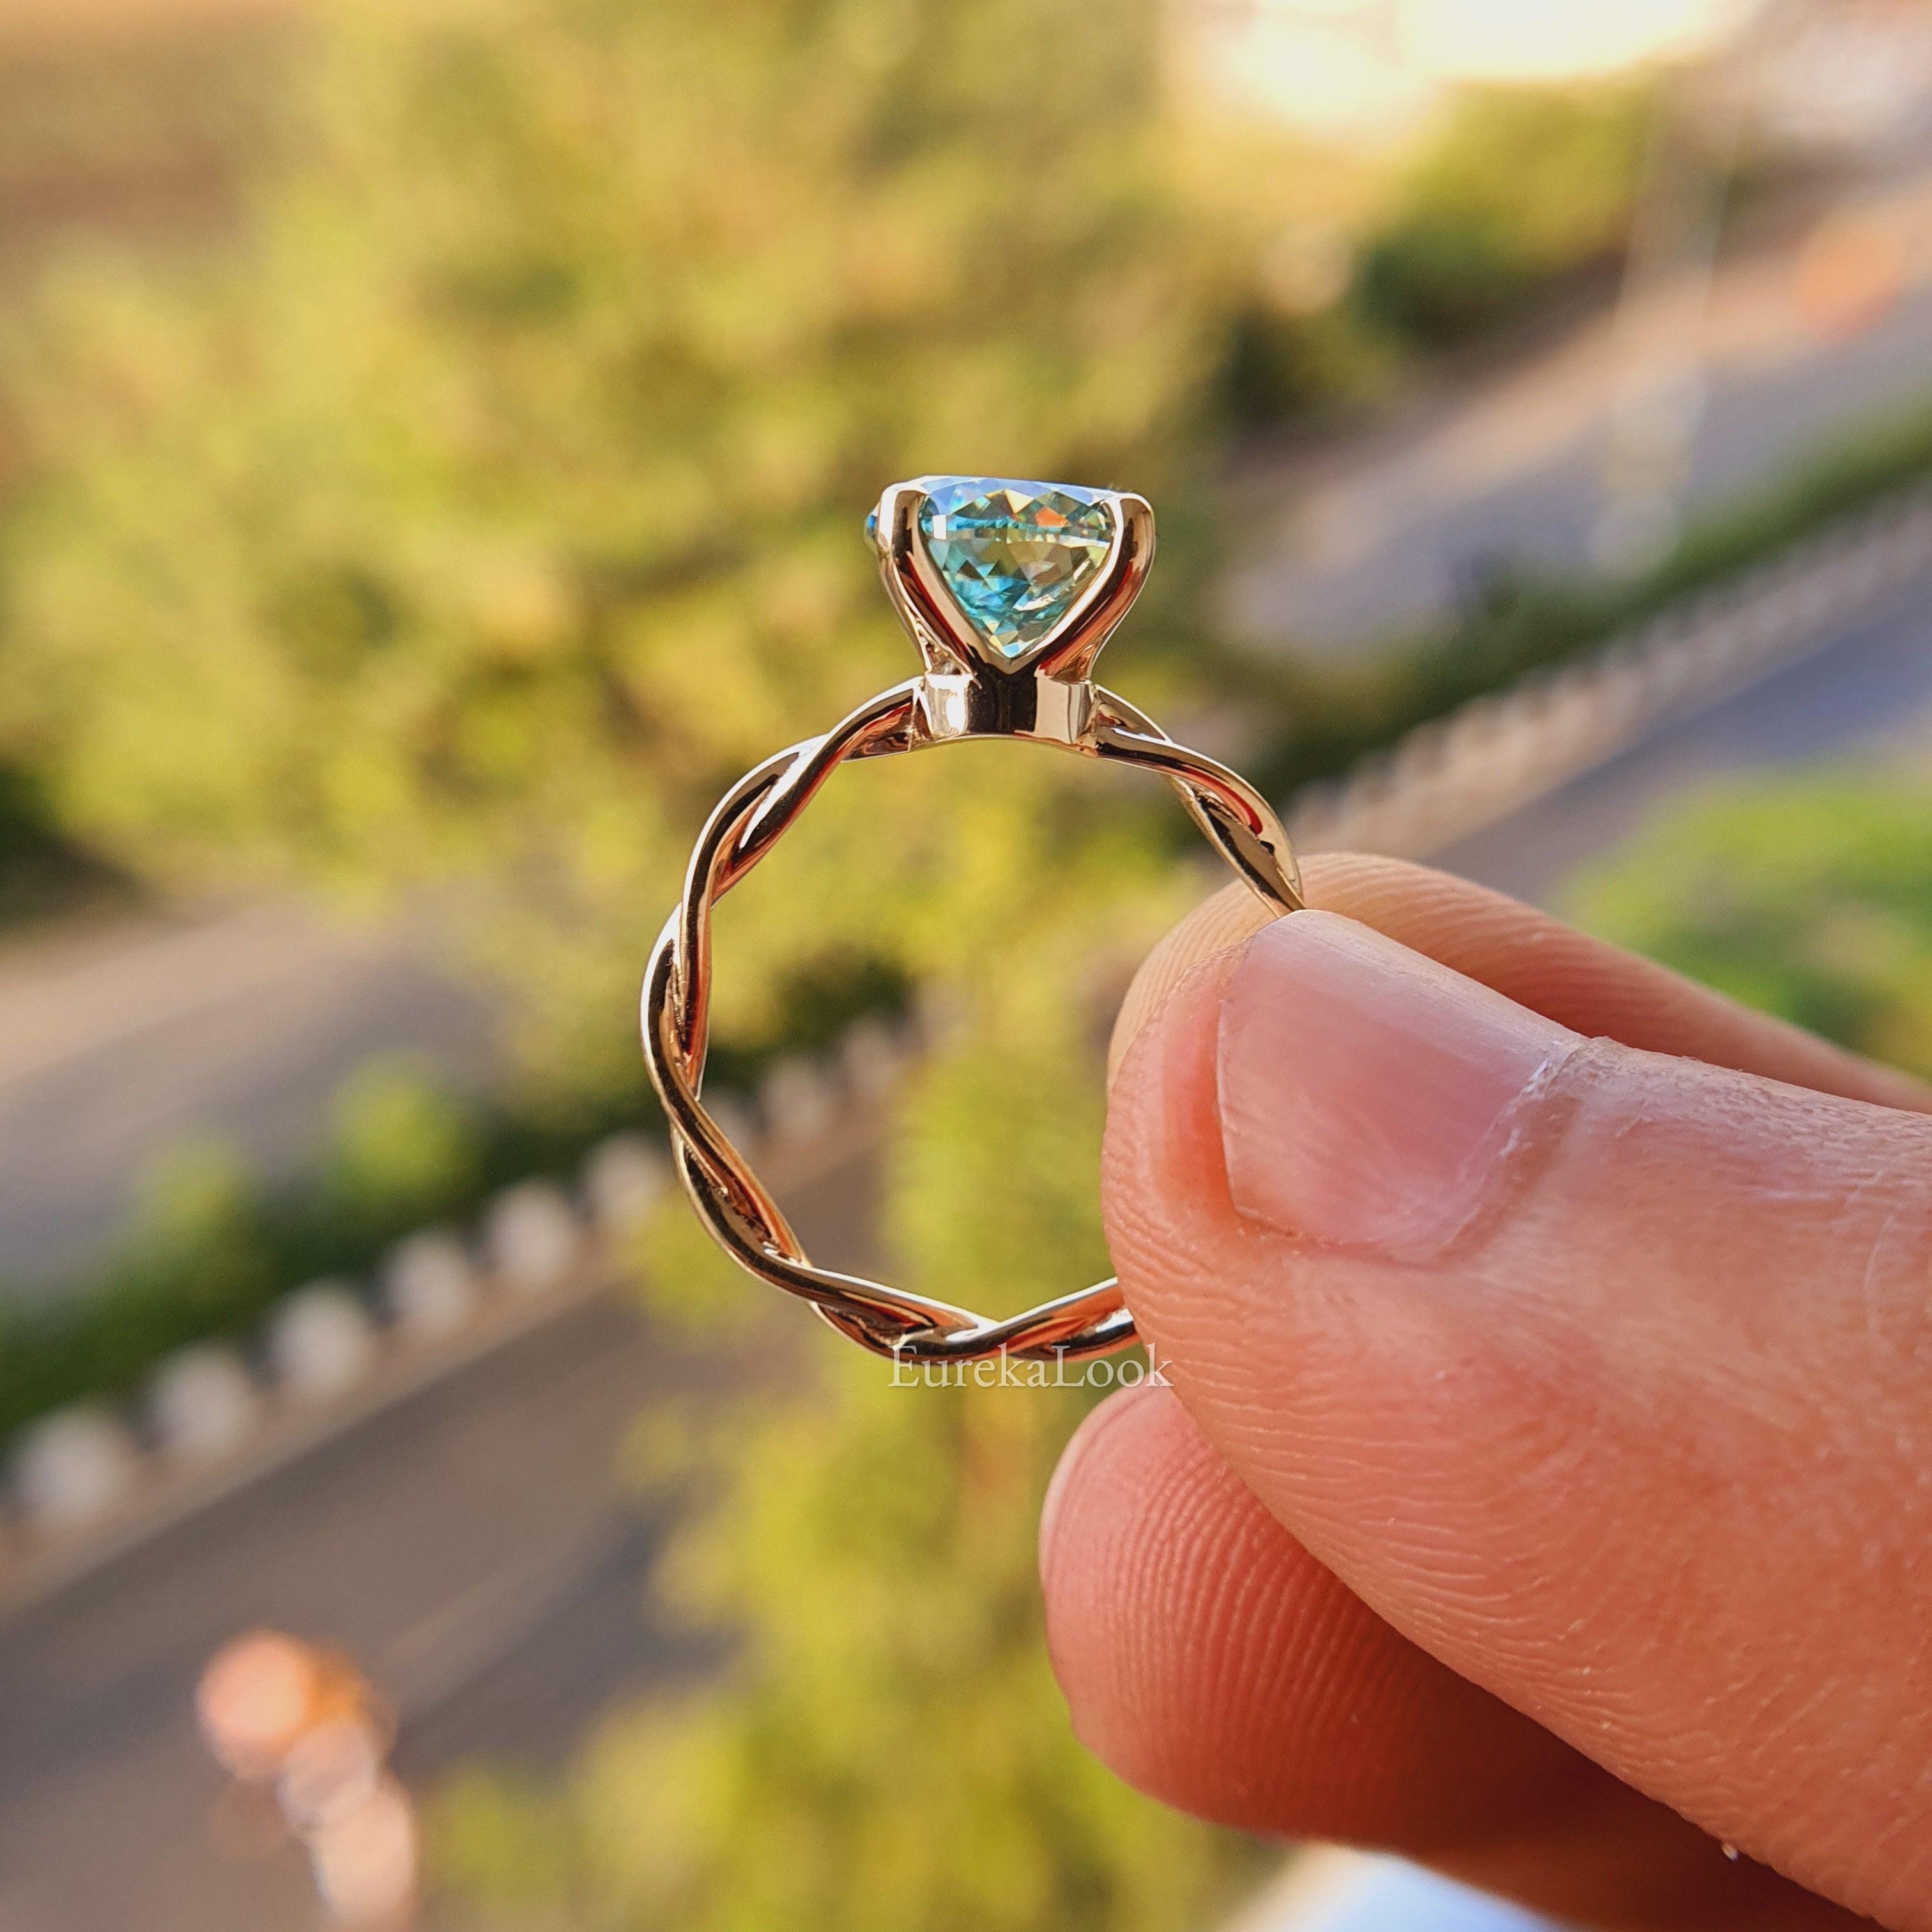 Antique Round Portuguese Cut Moissanite Engagement Ring - Eurekalook